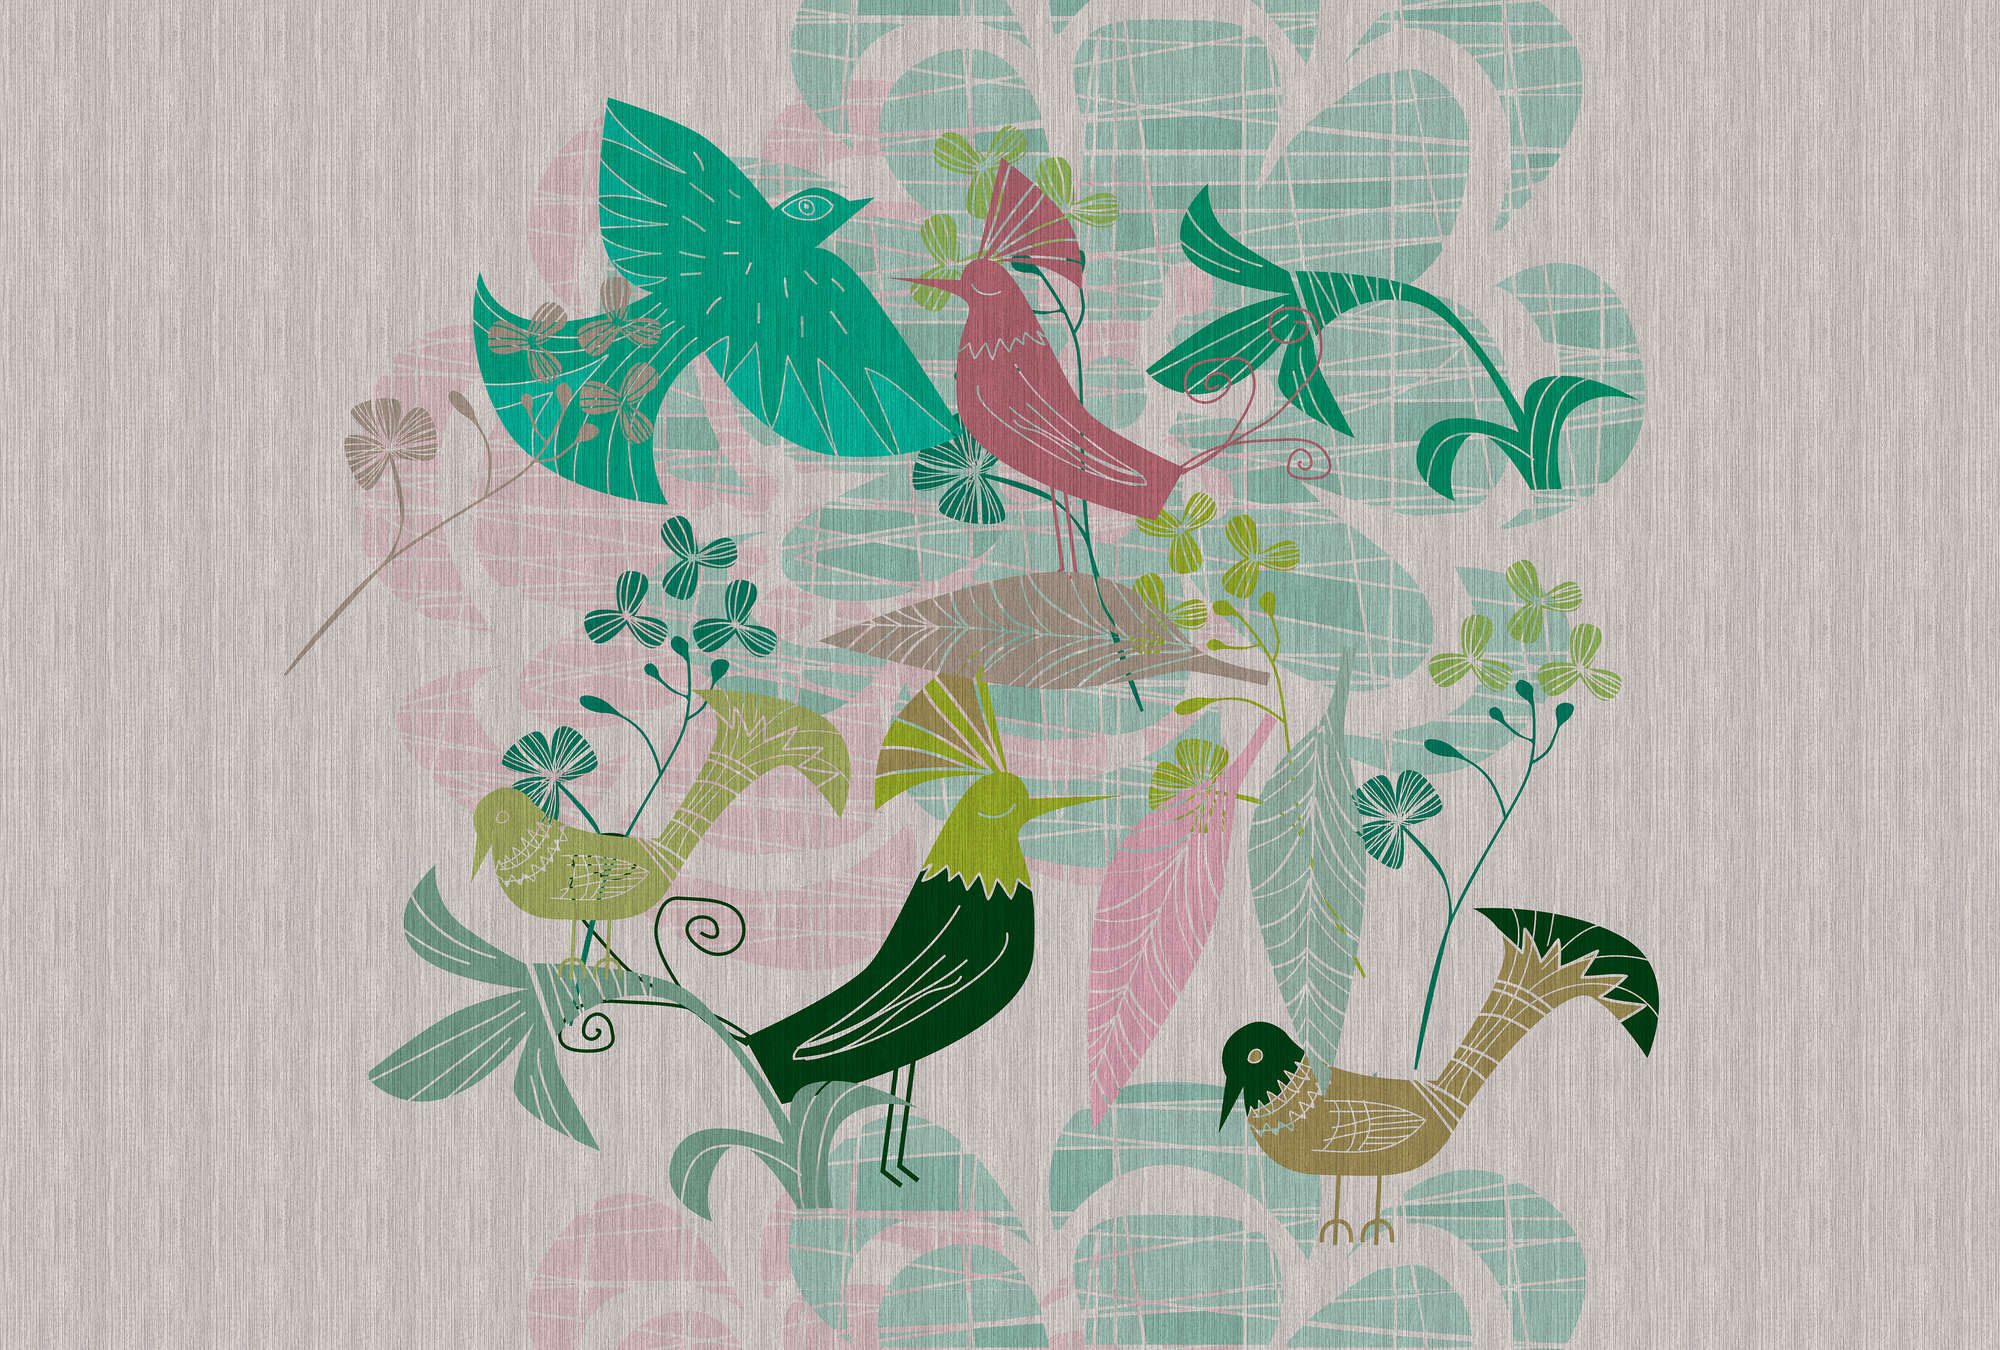             Birdland 3 - retro style green & pink birds pattern mural
        